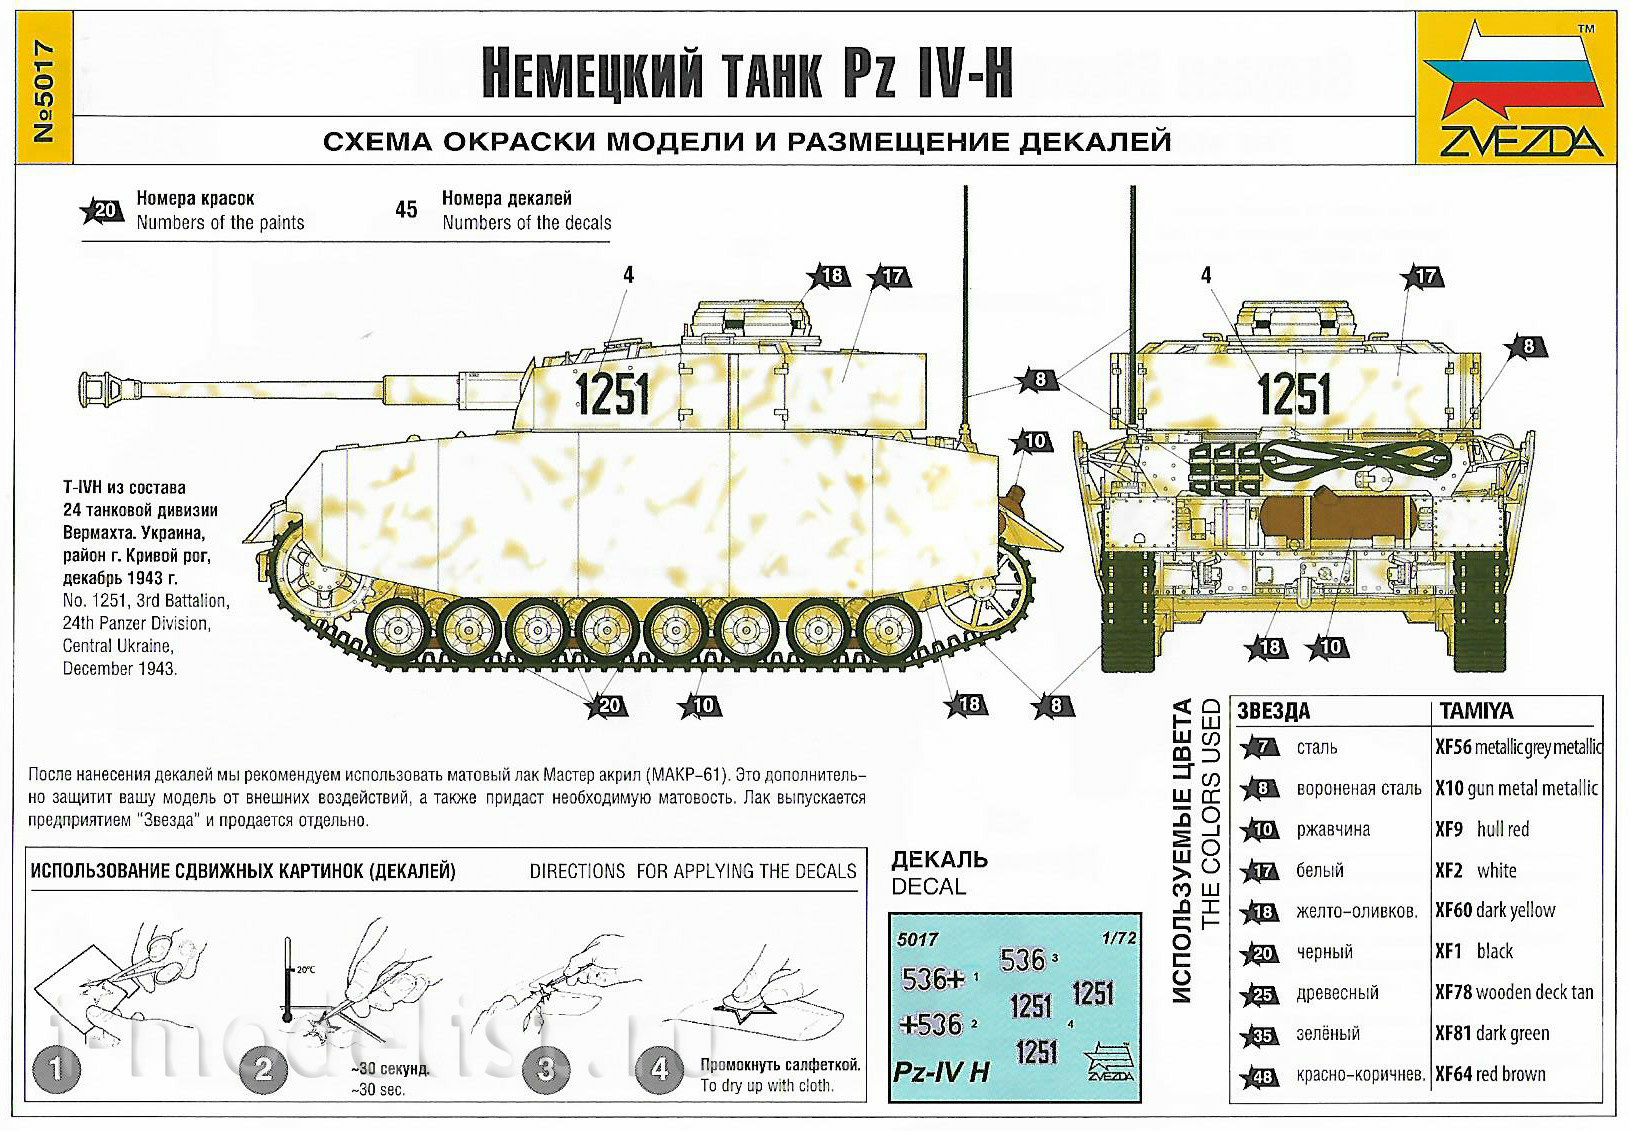 5017 Zvezda 1/72 German medium tank T-IV H